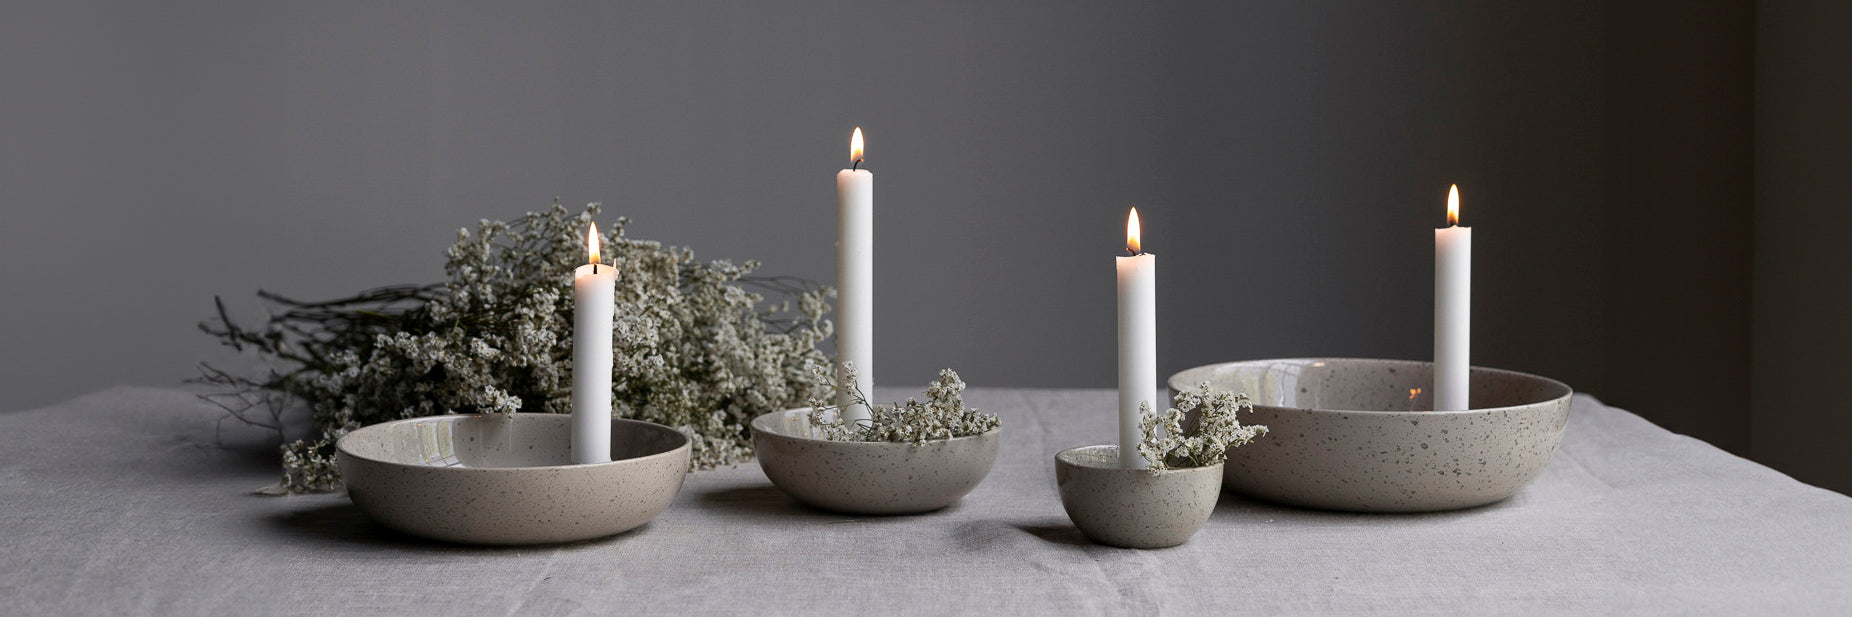 Kerzenhalter im skandinavischen Stil aus Keramik / Holz gefertigt